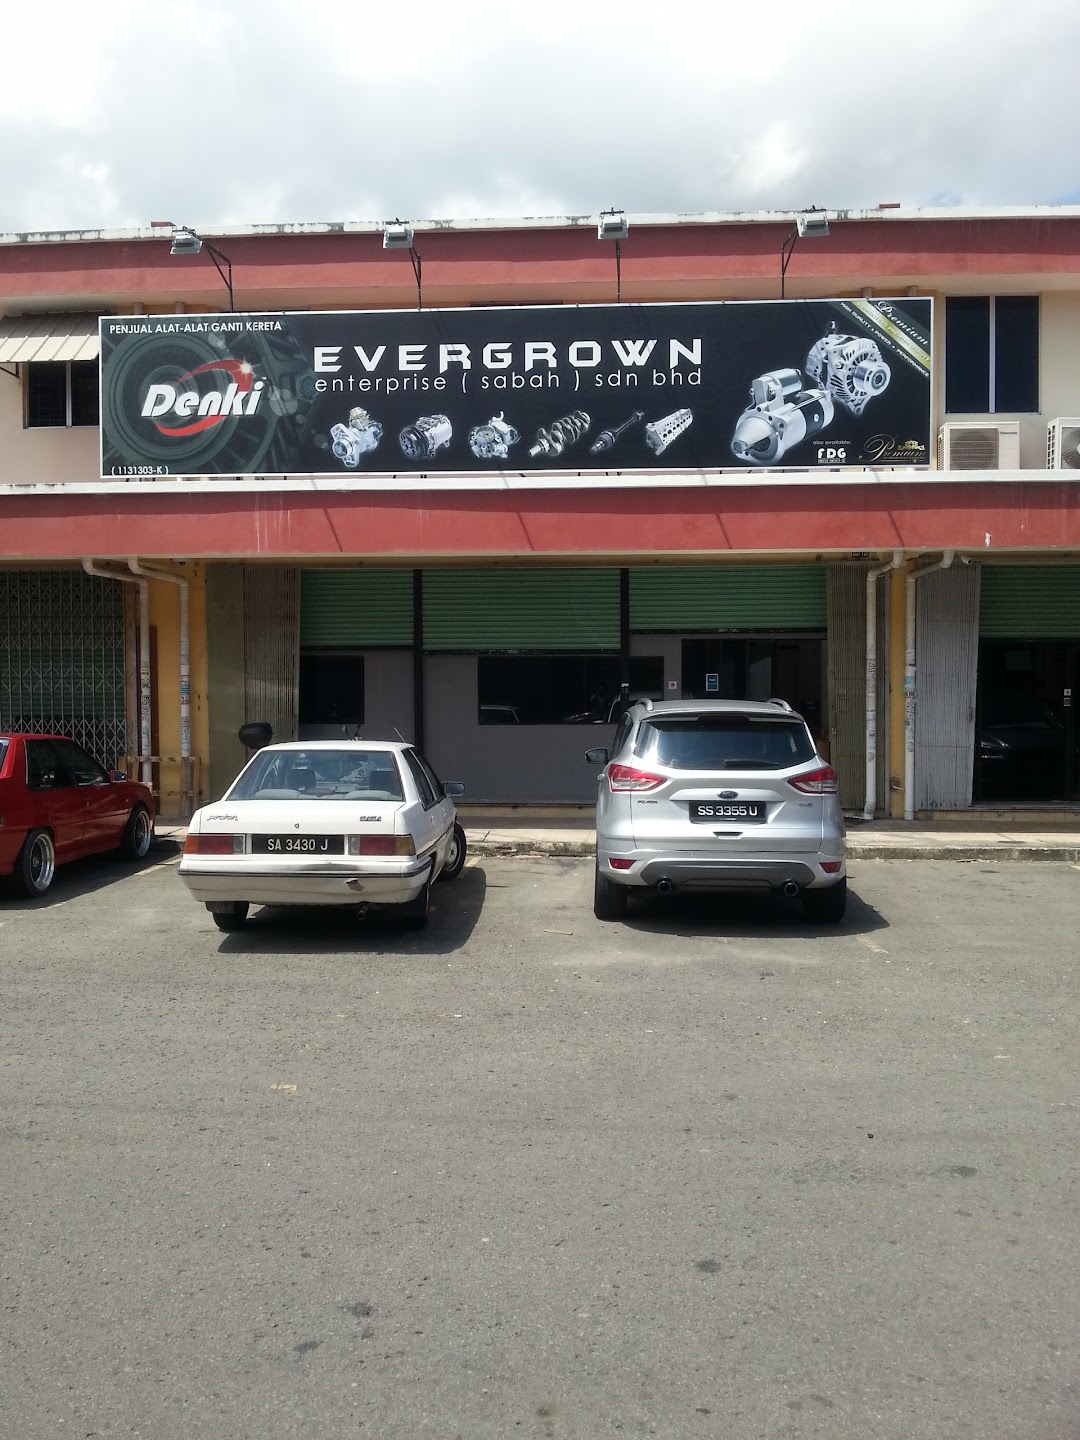 Evergrown Enterprise (Sabah) Sdn Bhd